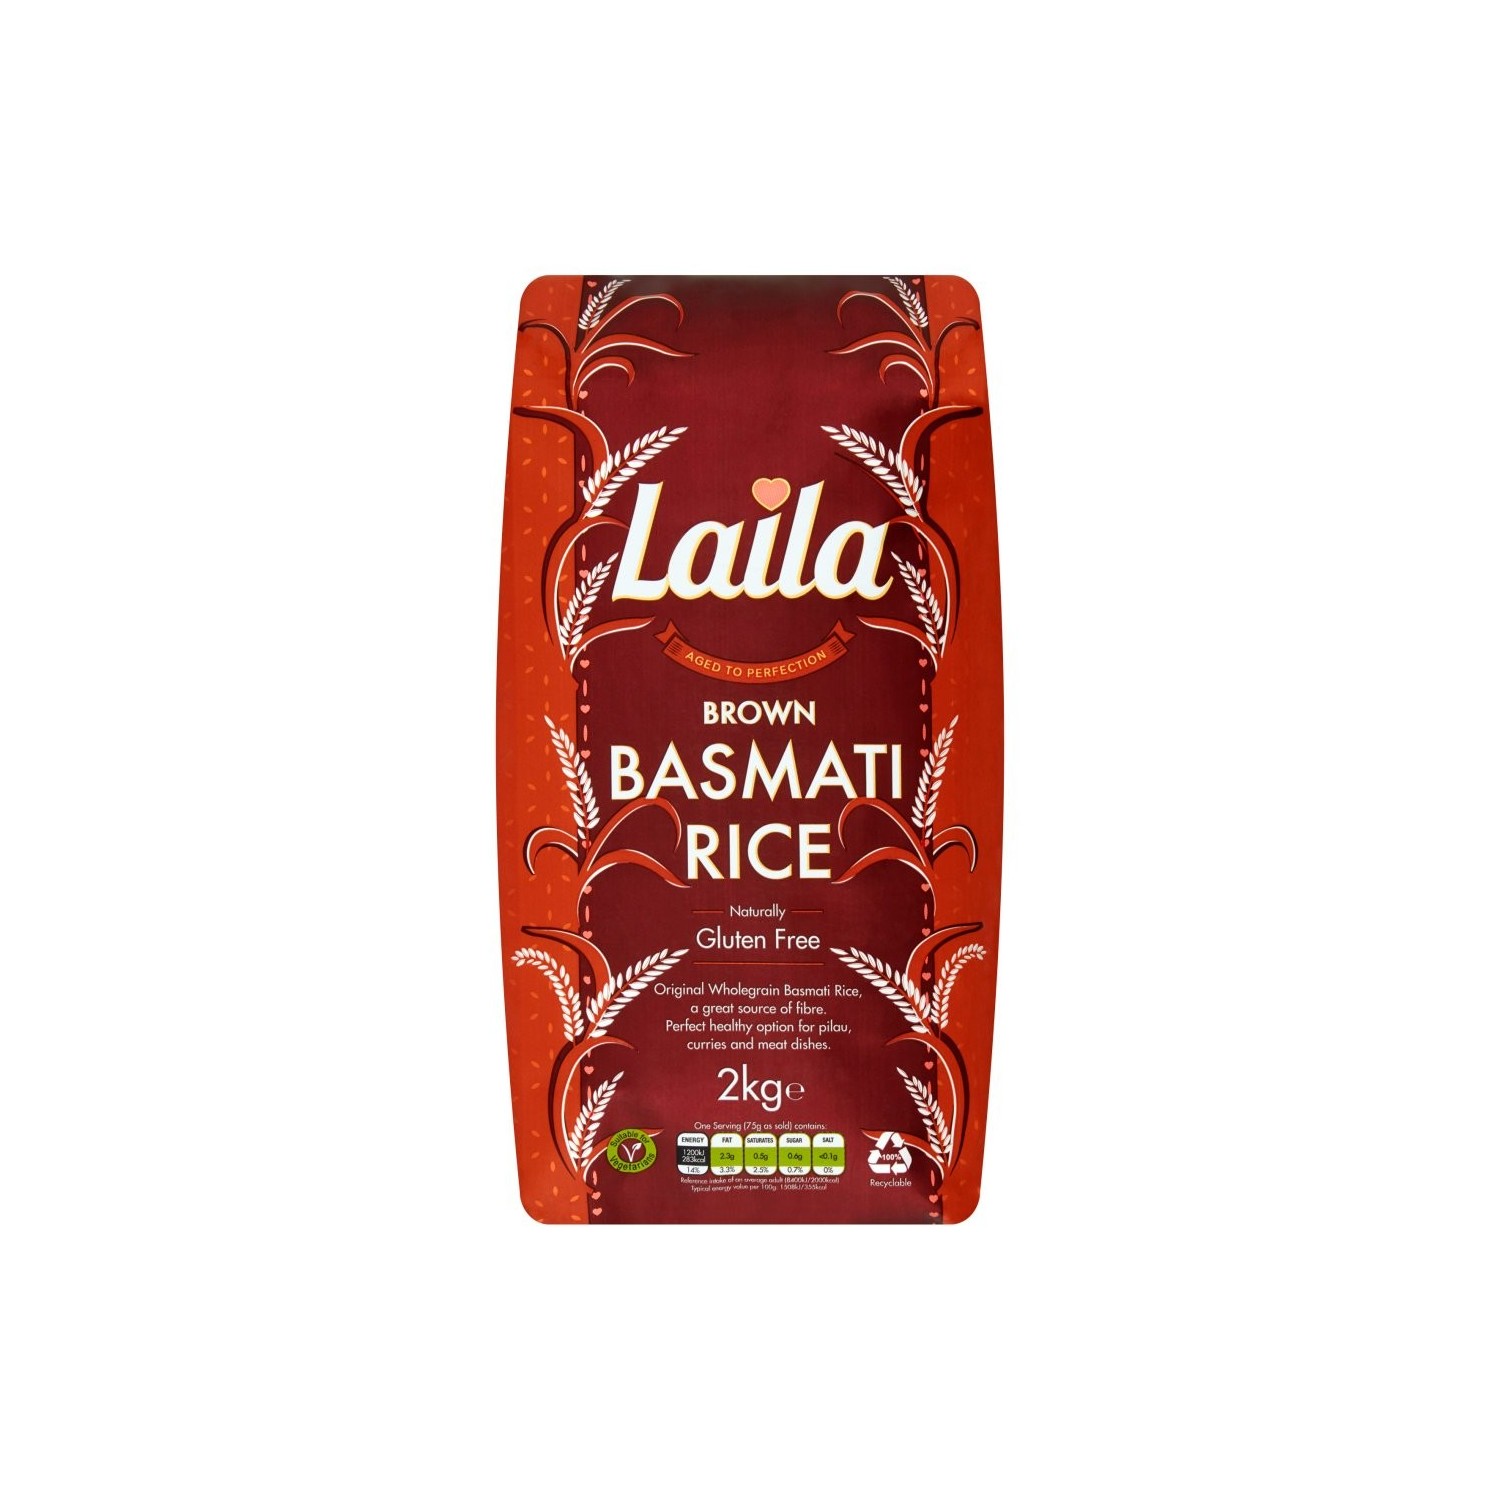 Laila Brown Basmati Rice 2kg Naturally Gluten Free Rice - 5020580410483